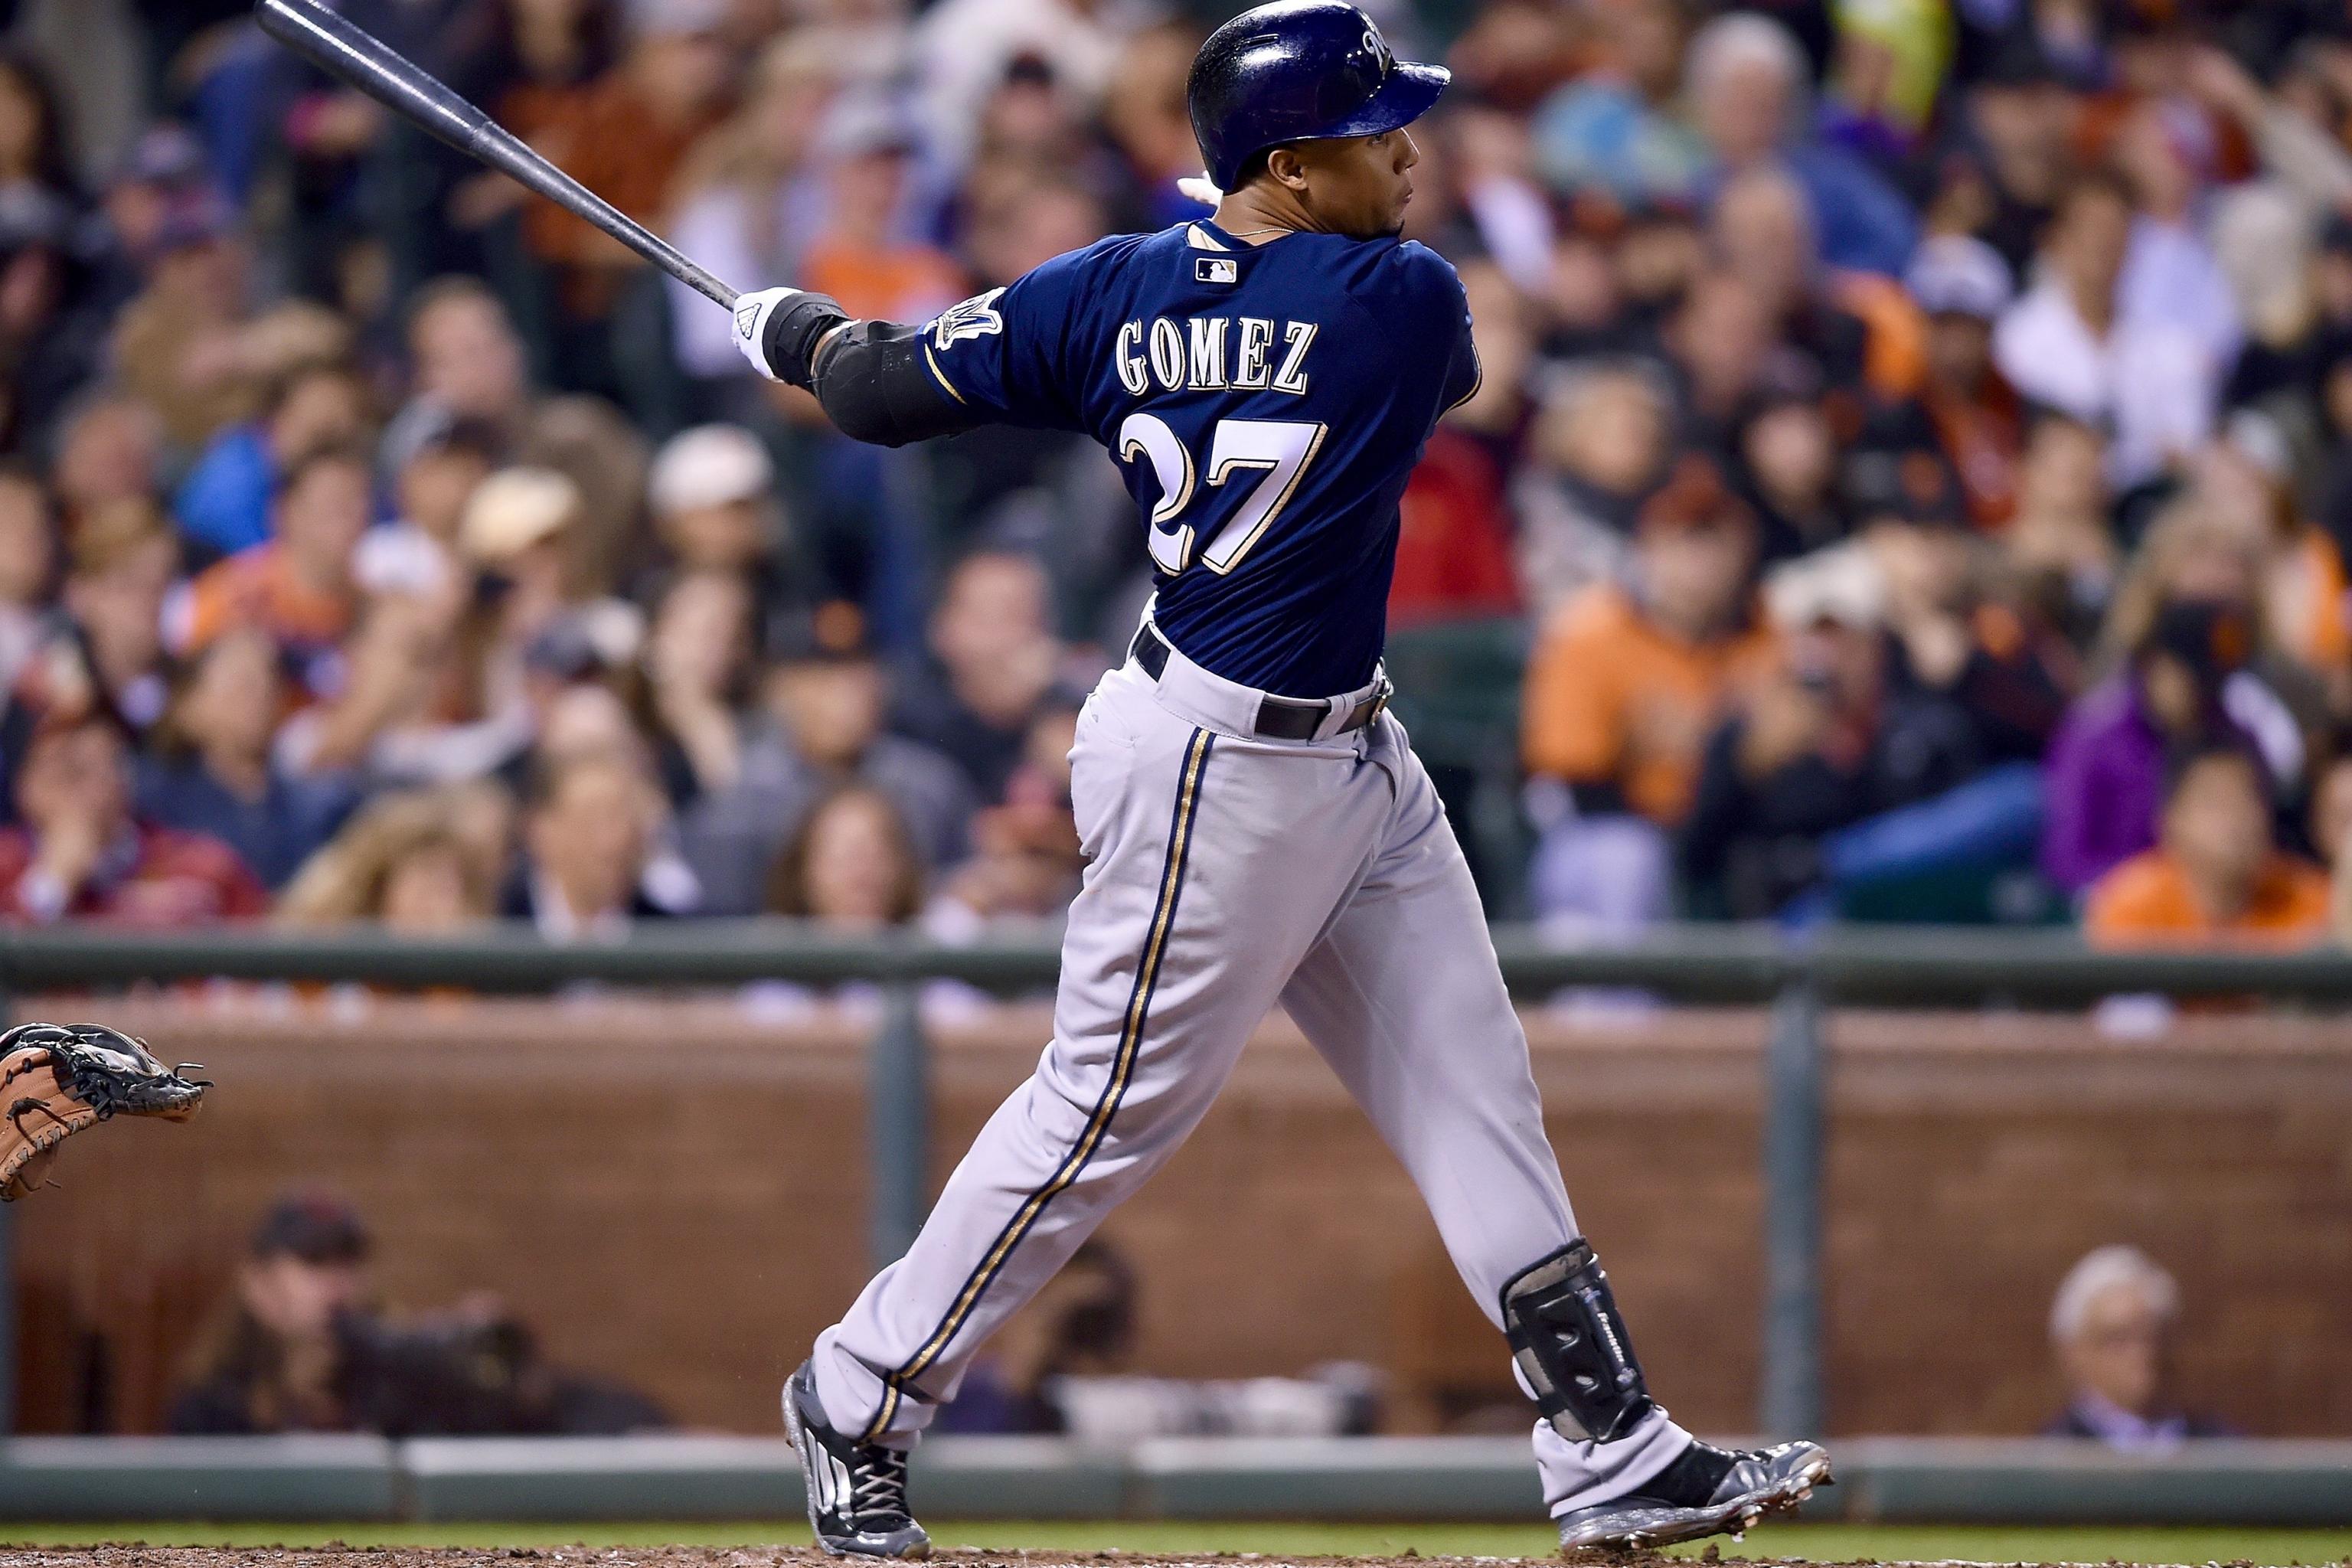 Mets call up Carlos Gomez - NBC Sports